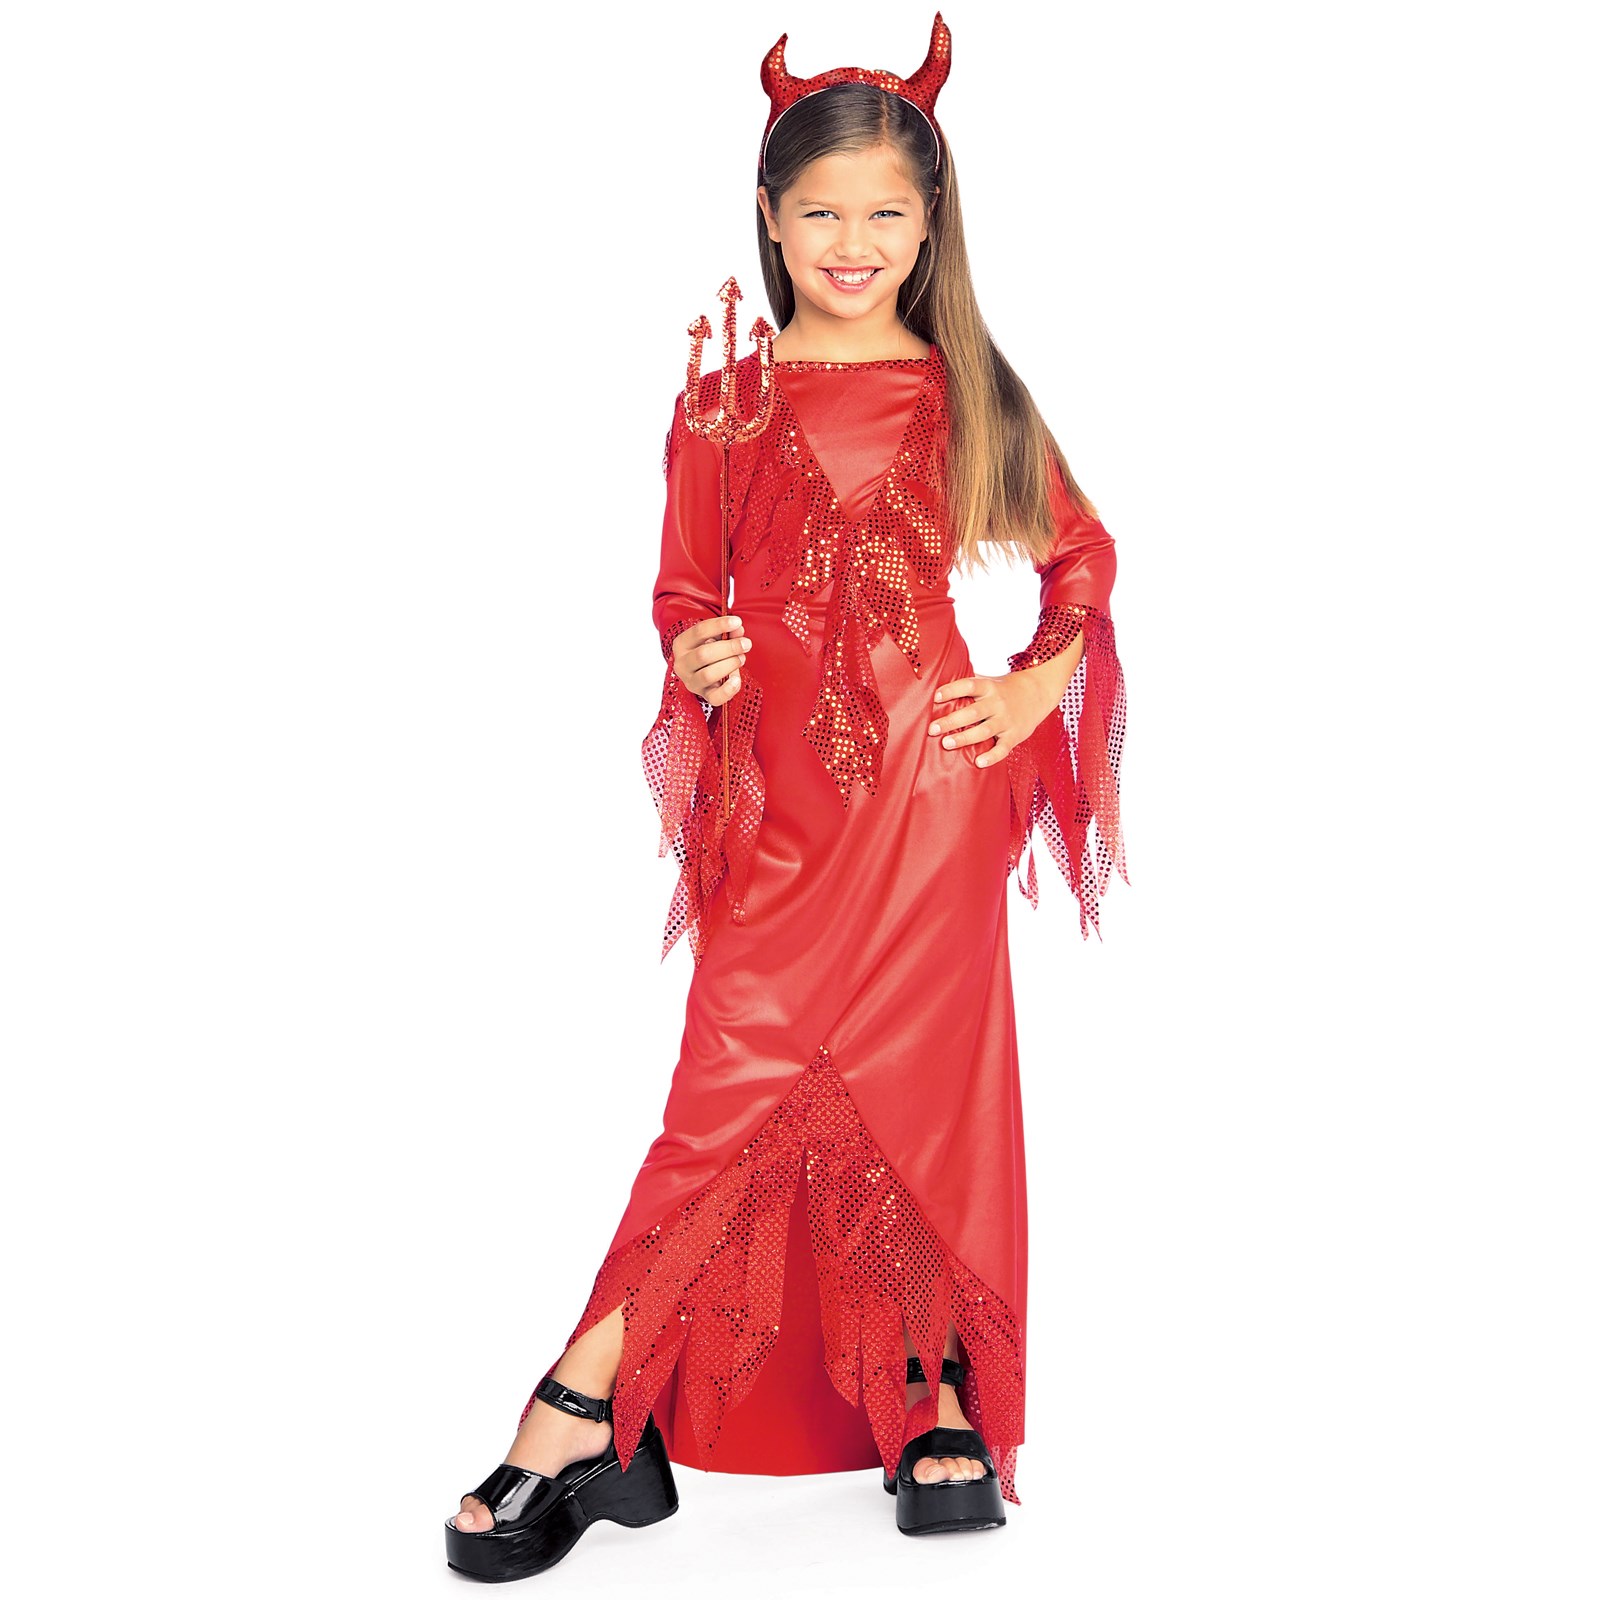 Devilish Diva Child Costume